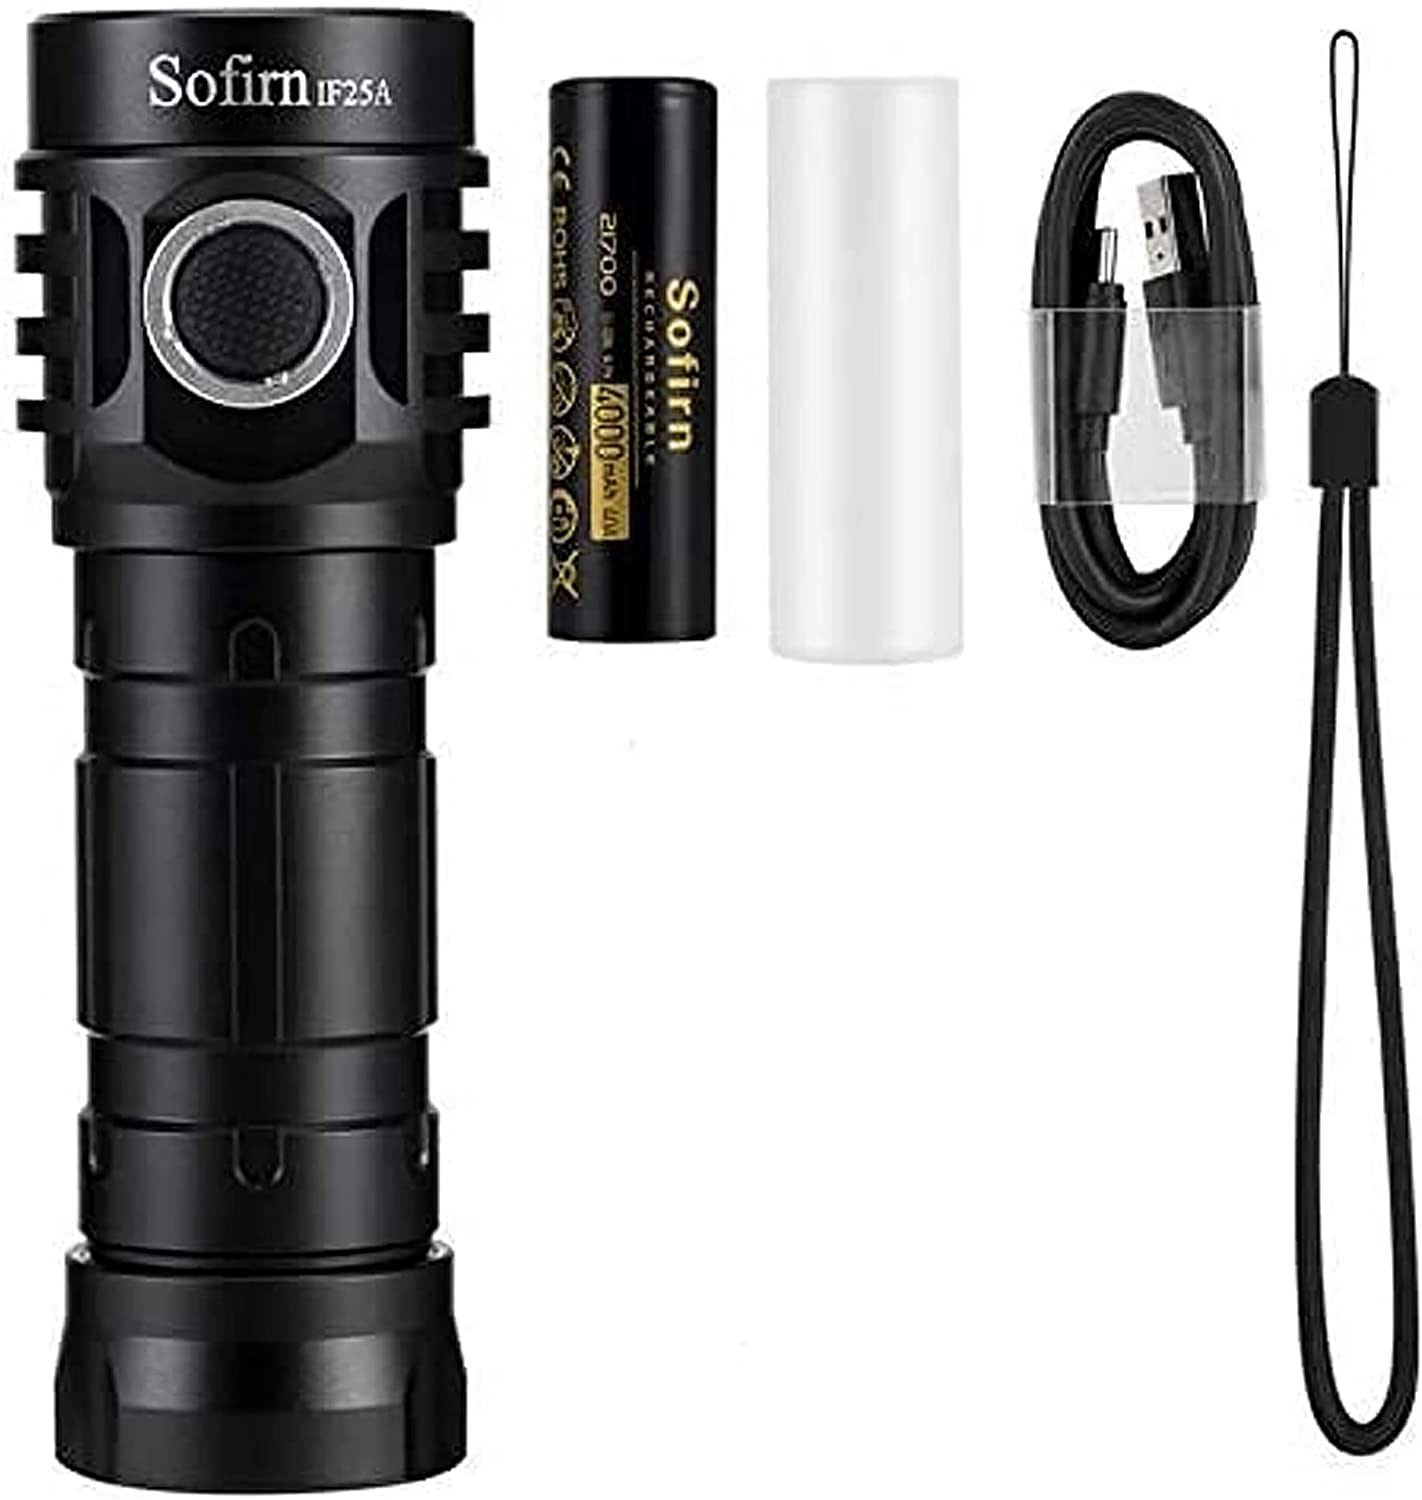 Sofirn IF25A flashlight- 4000k or 6500k - $32.89 - Amazon